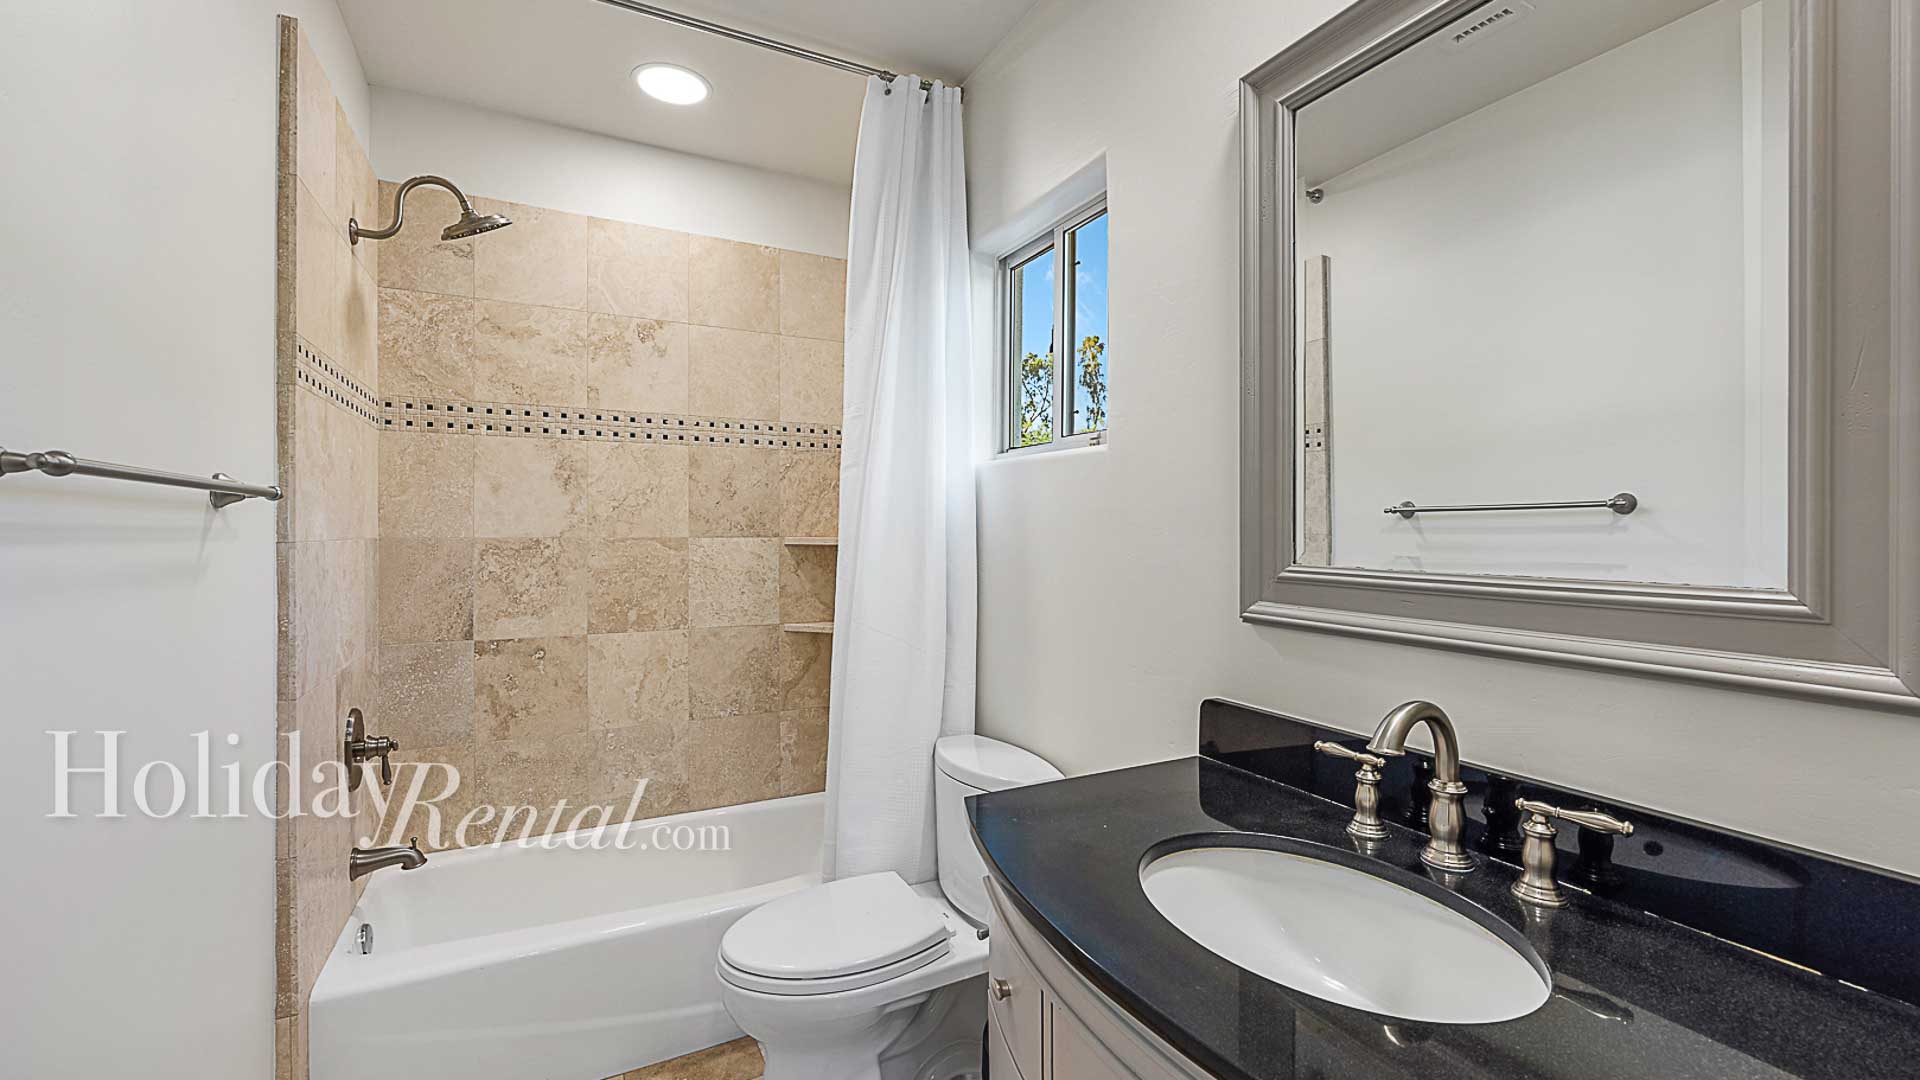 Bathroom 4 (En Suite to Bedroom 4) - Vanity with shower and tub combo.